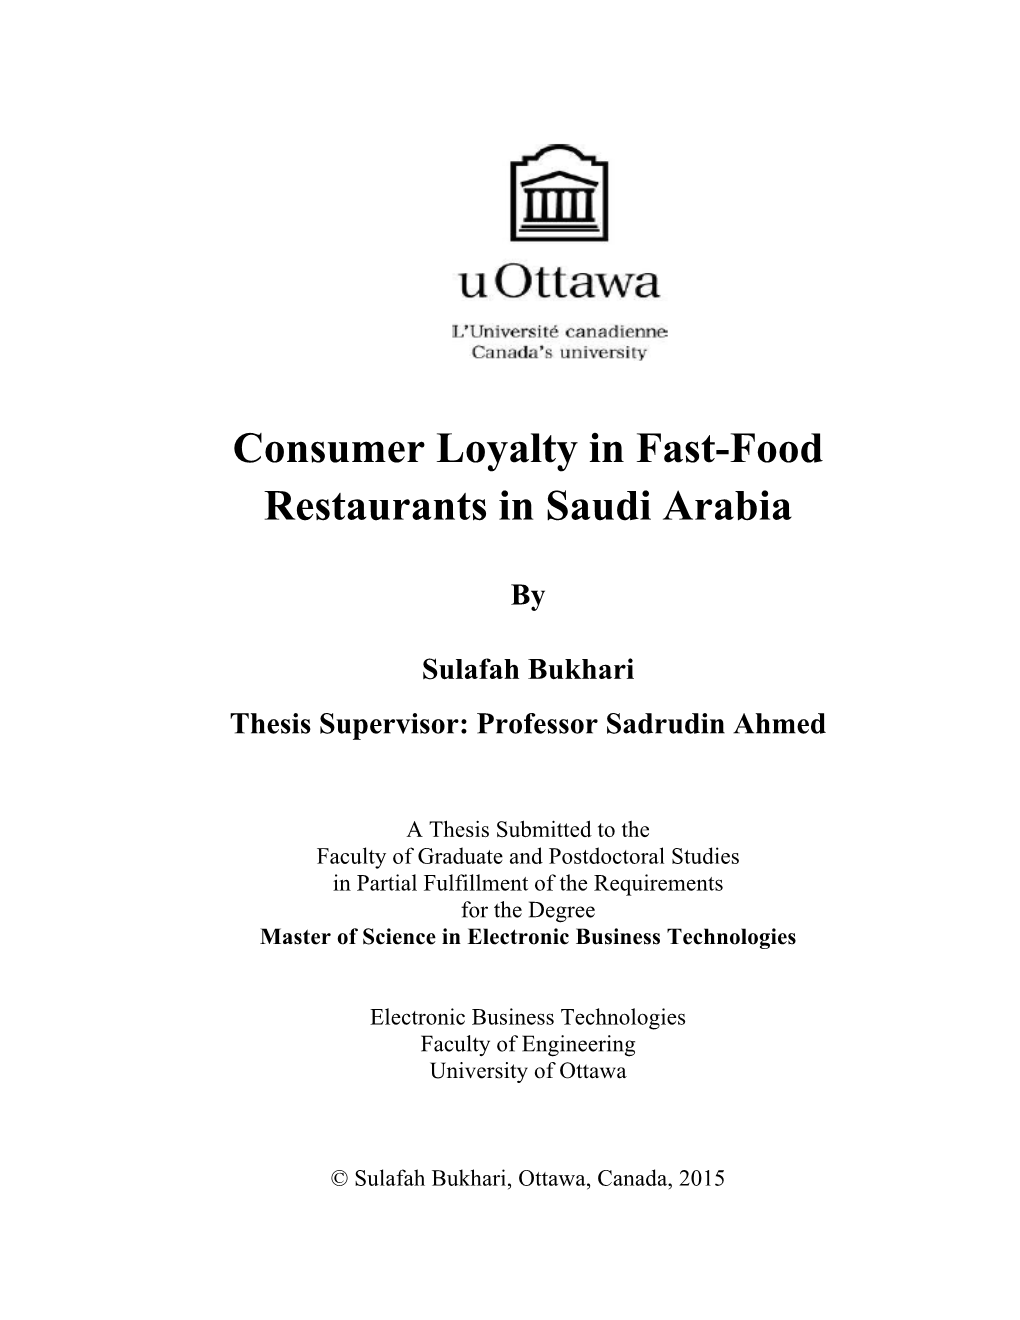 Consumer Loyalty in Fast-Food Restaurants in Saudi Arabia